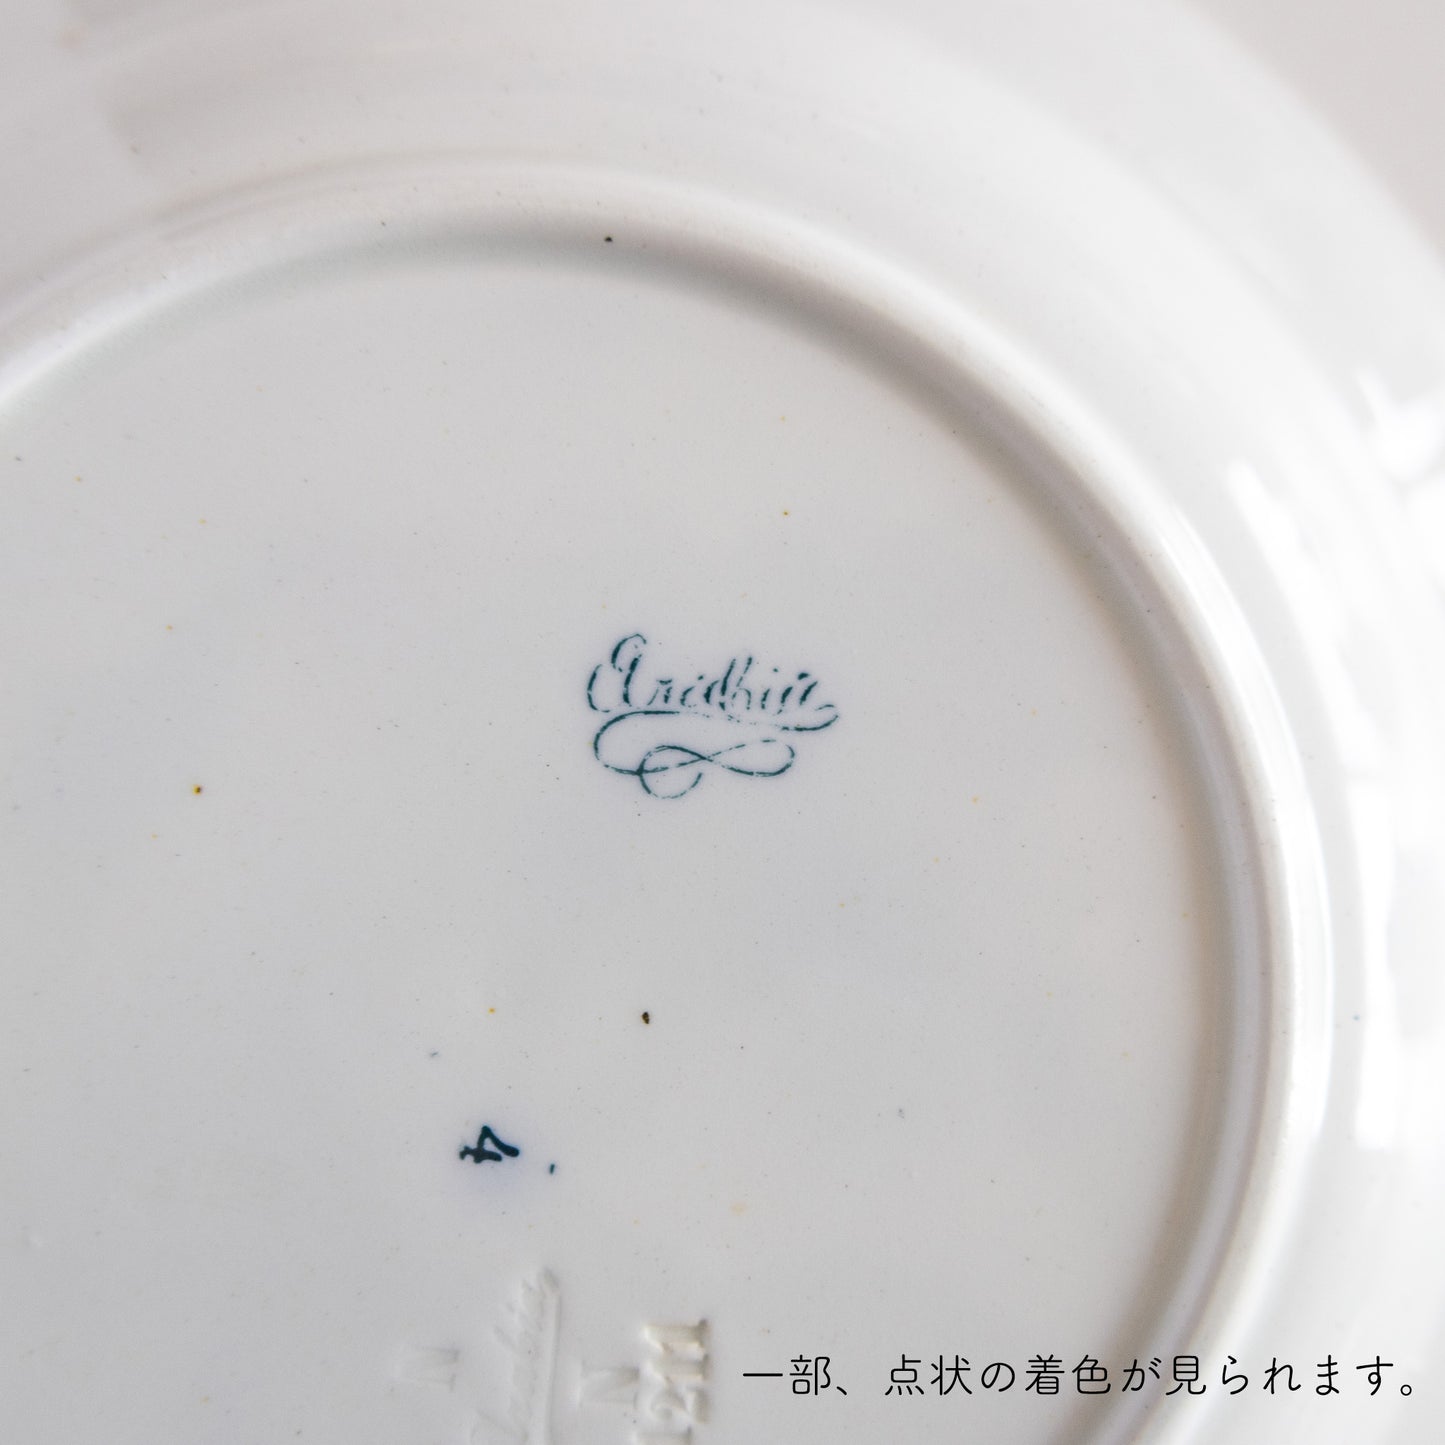 vineta (ビネタ) deep plate 22.5cm / arabia (アラビア)